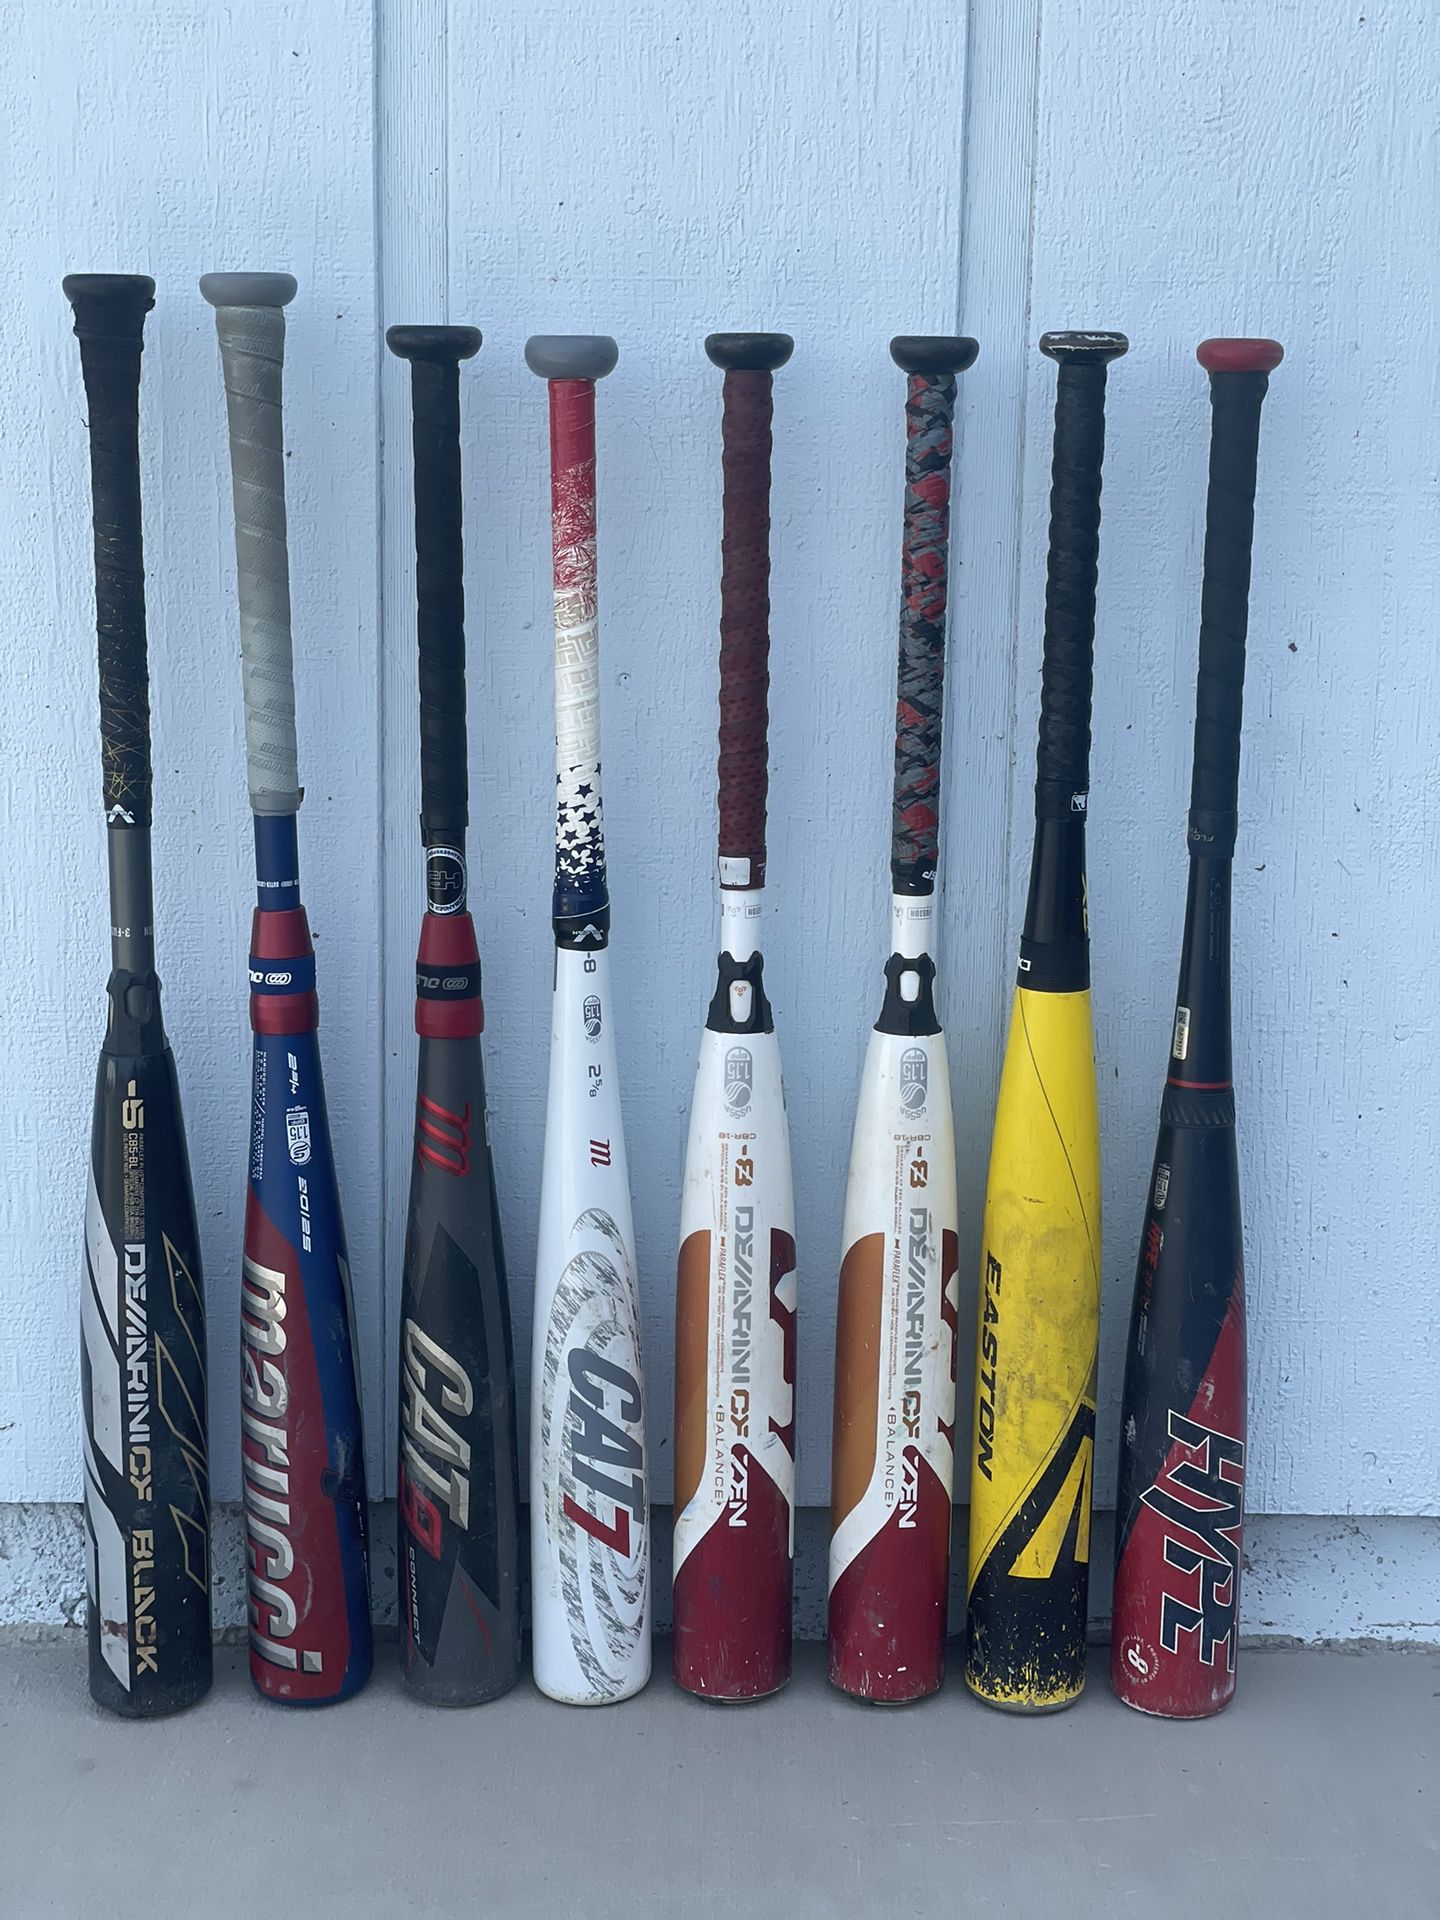 USSSA baseball bats 